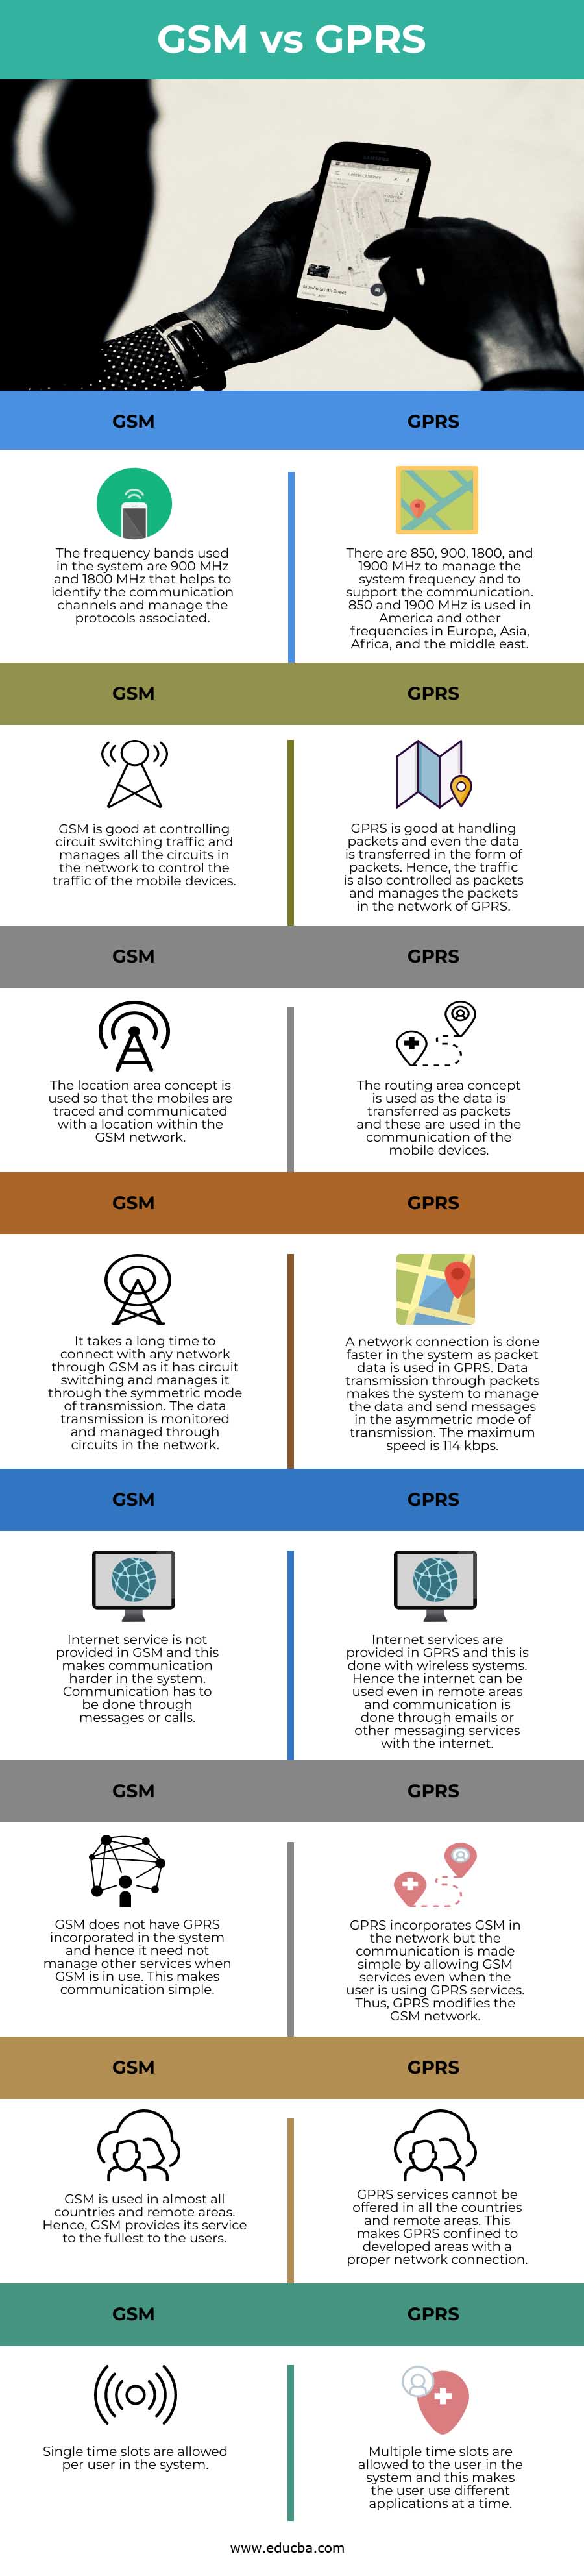 GSM vs GPRS info